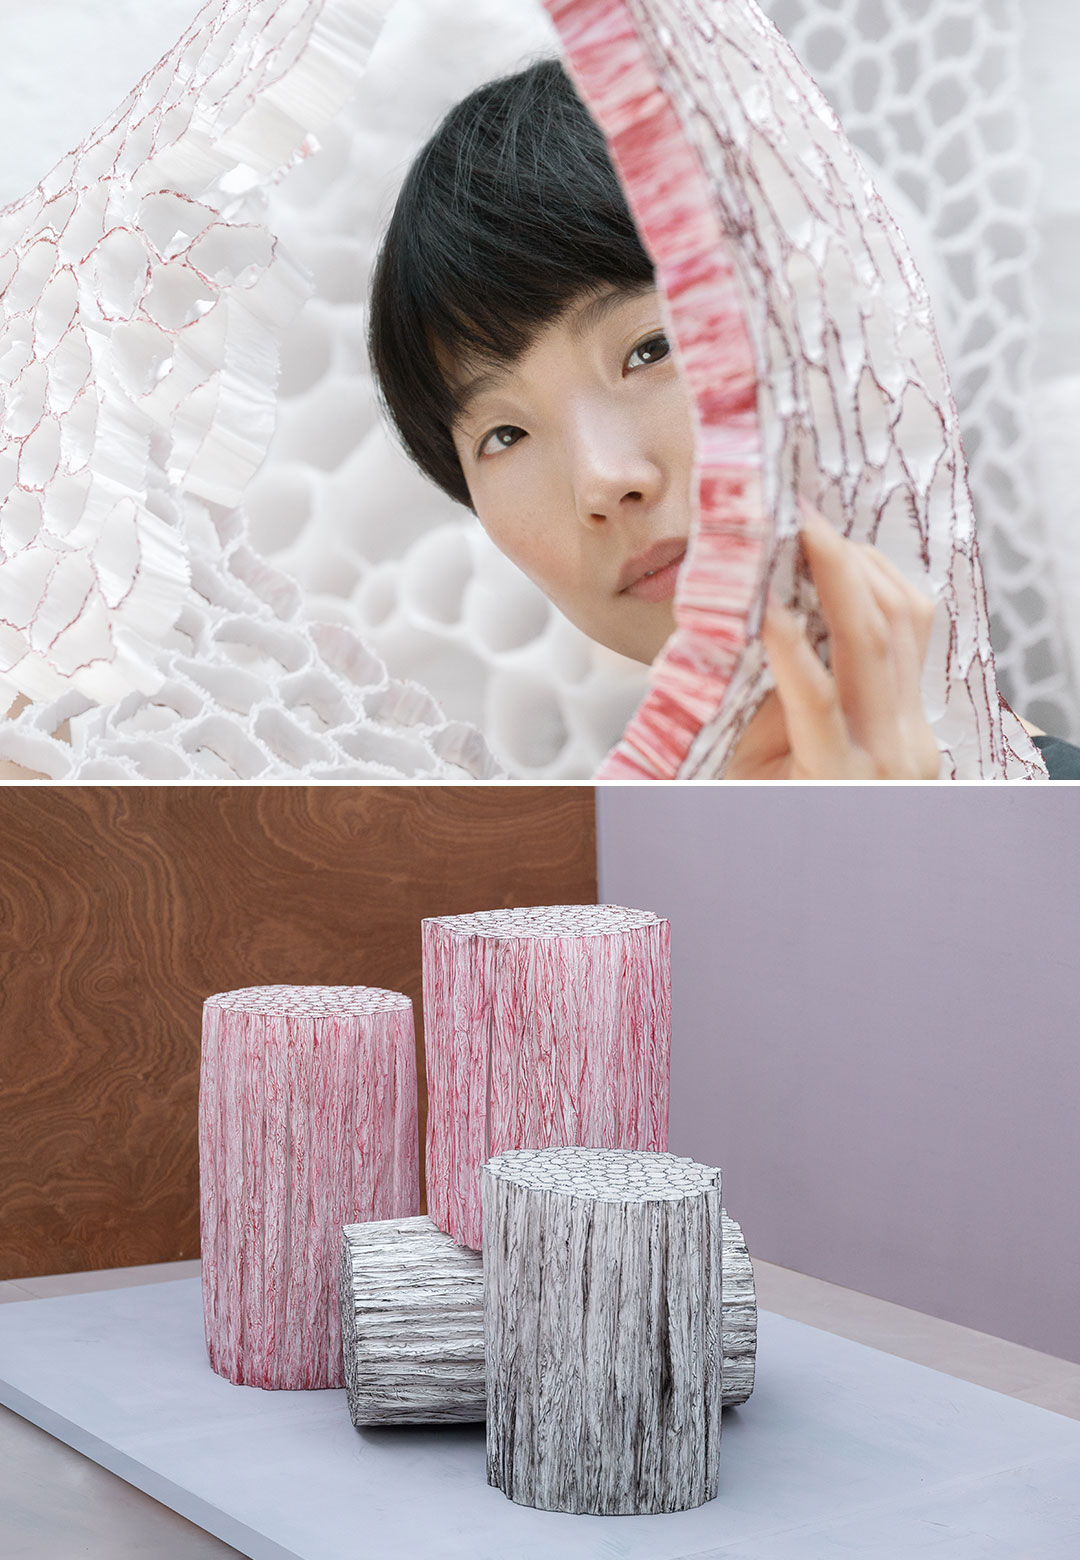 Pao Hui Kao balances fragility and sturdiness by using paper as a medium